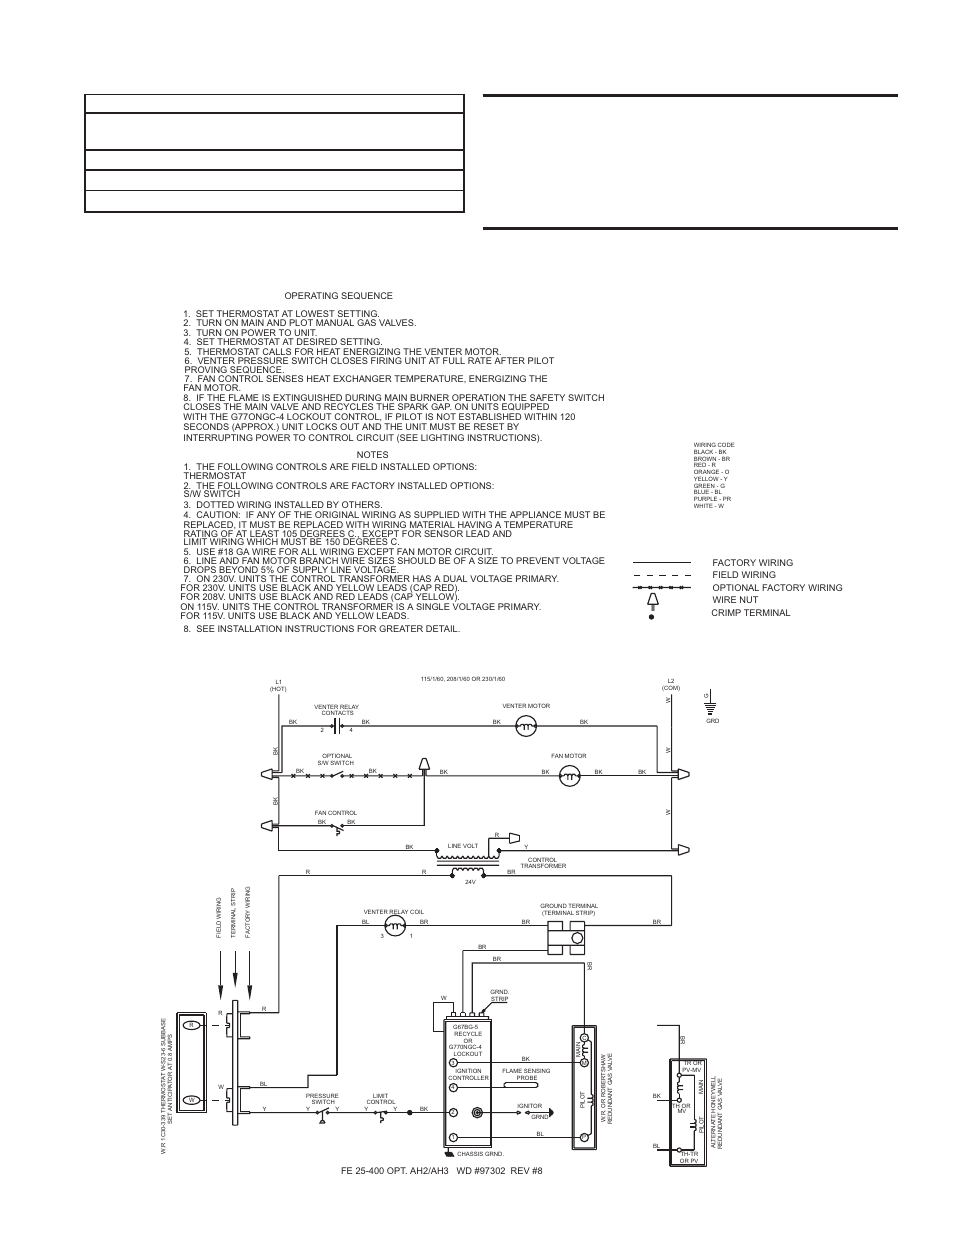 Diagram Typical Unit Heater Wiring Diagram Full Version Hd Quality Wiring Diagram Moondiagram Studio 14 It